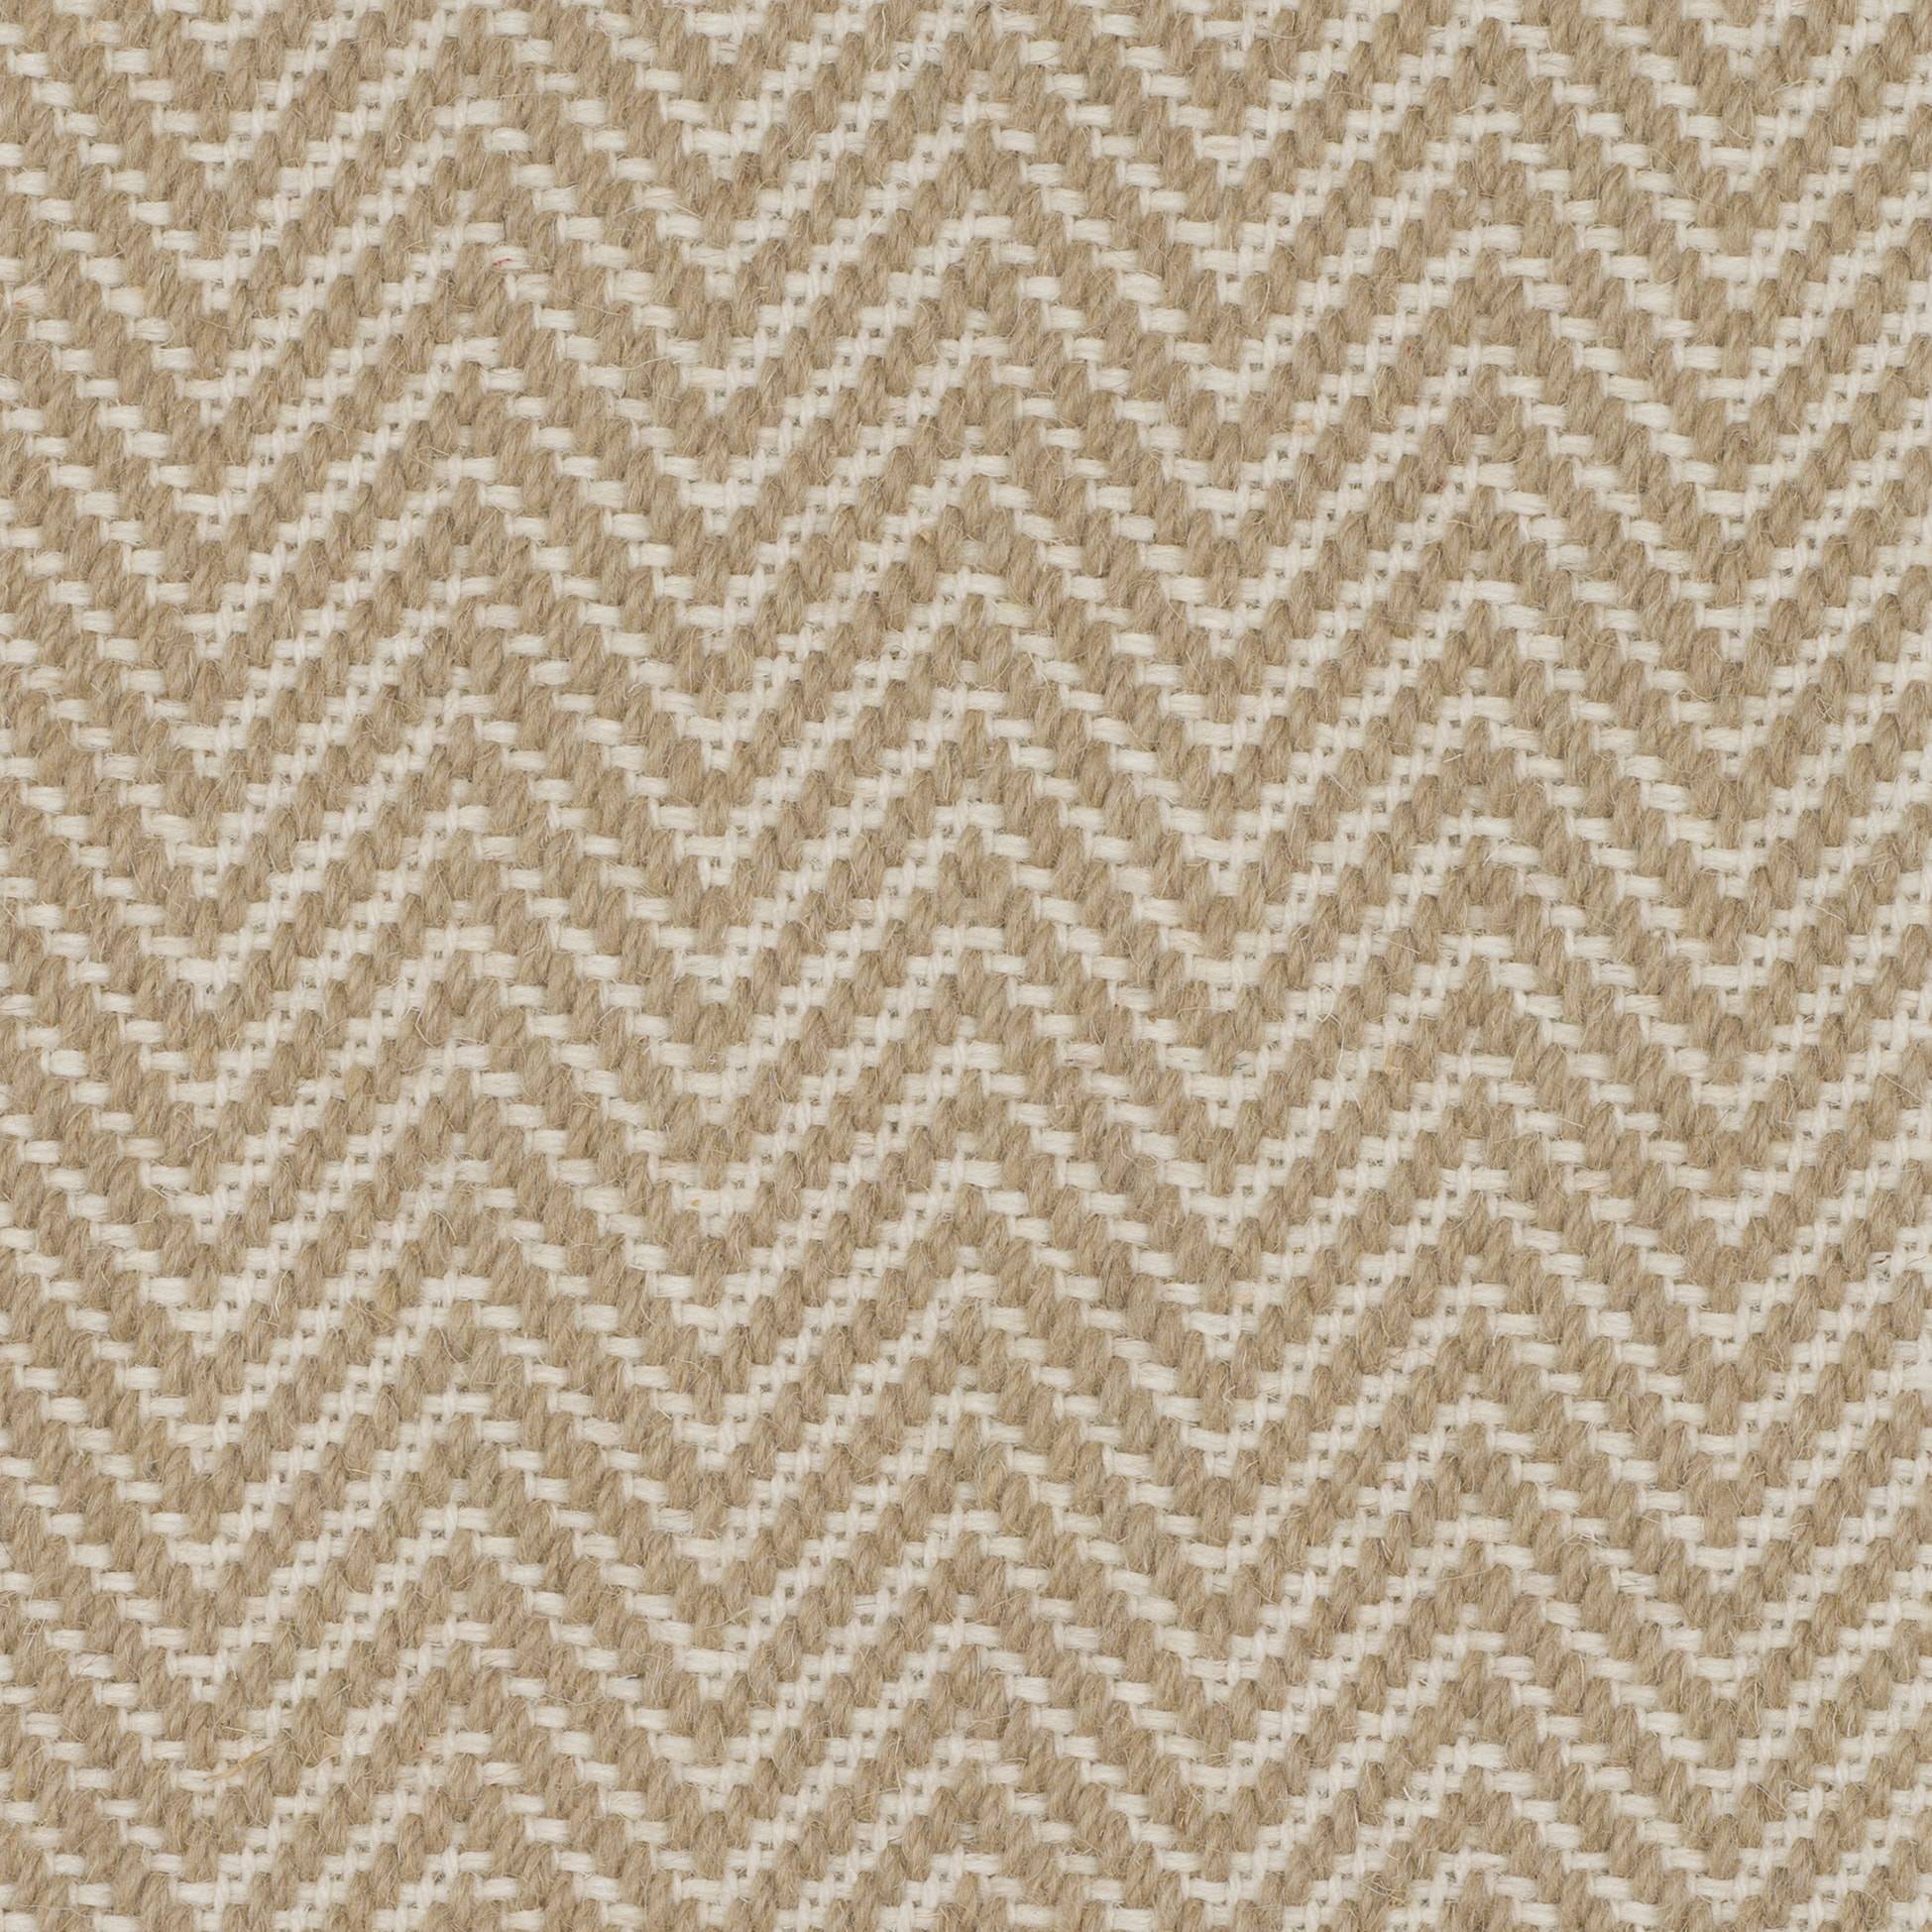 Sorrento: Naturale - 100% Wool Carpet